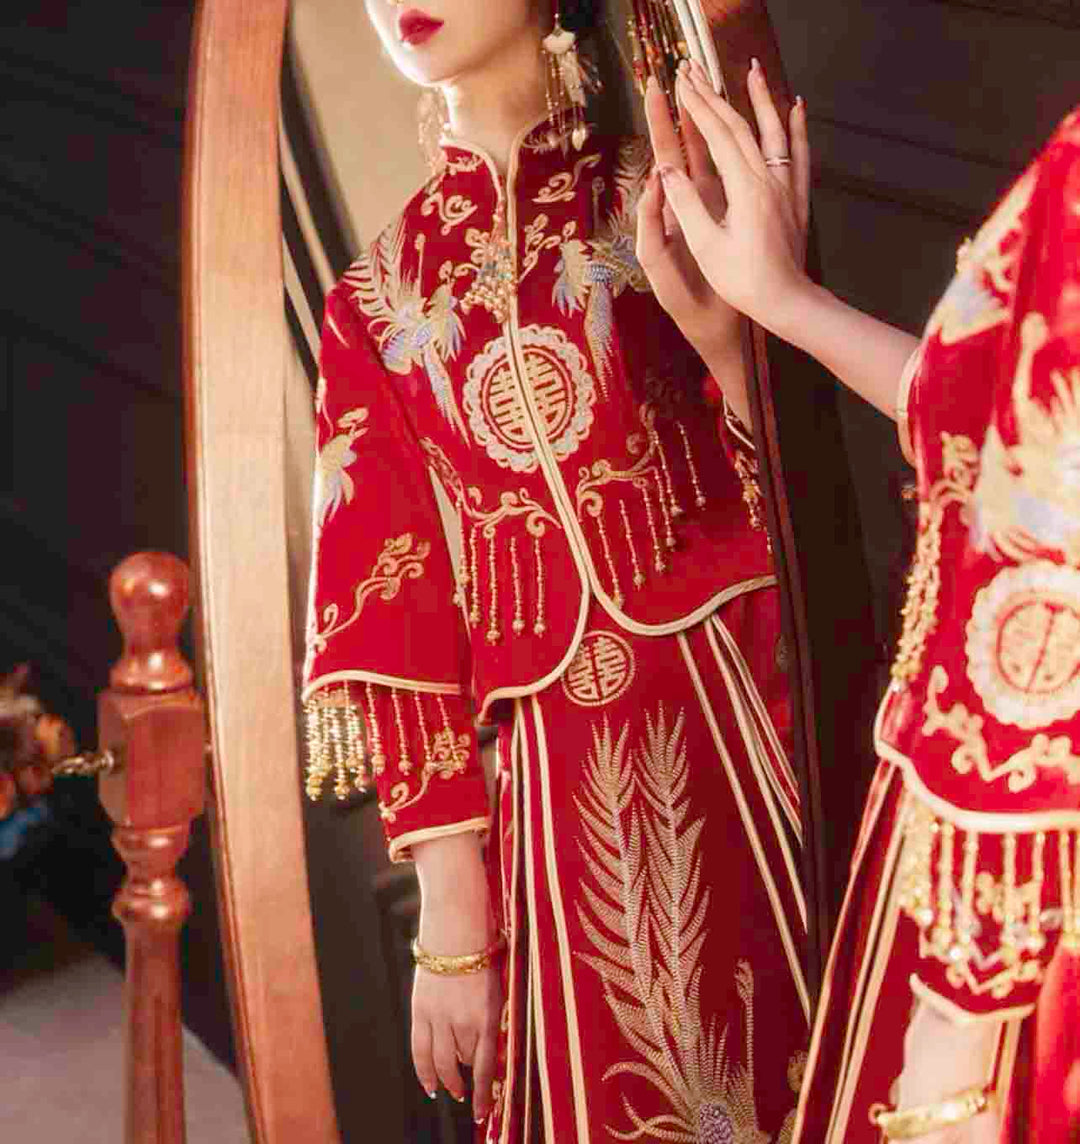 Beaded Coat and Skirt Wedding Qun Kua 龍鳳卦/秀禾服 for Bride in Elegant Red Color